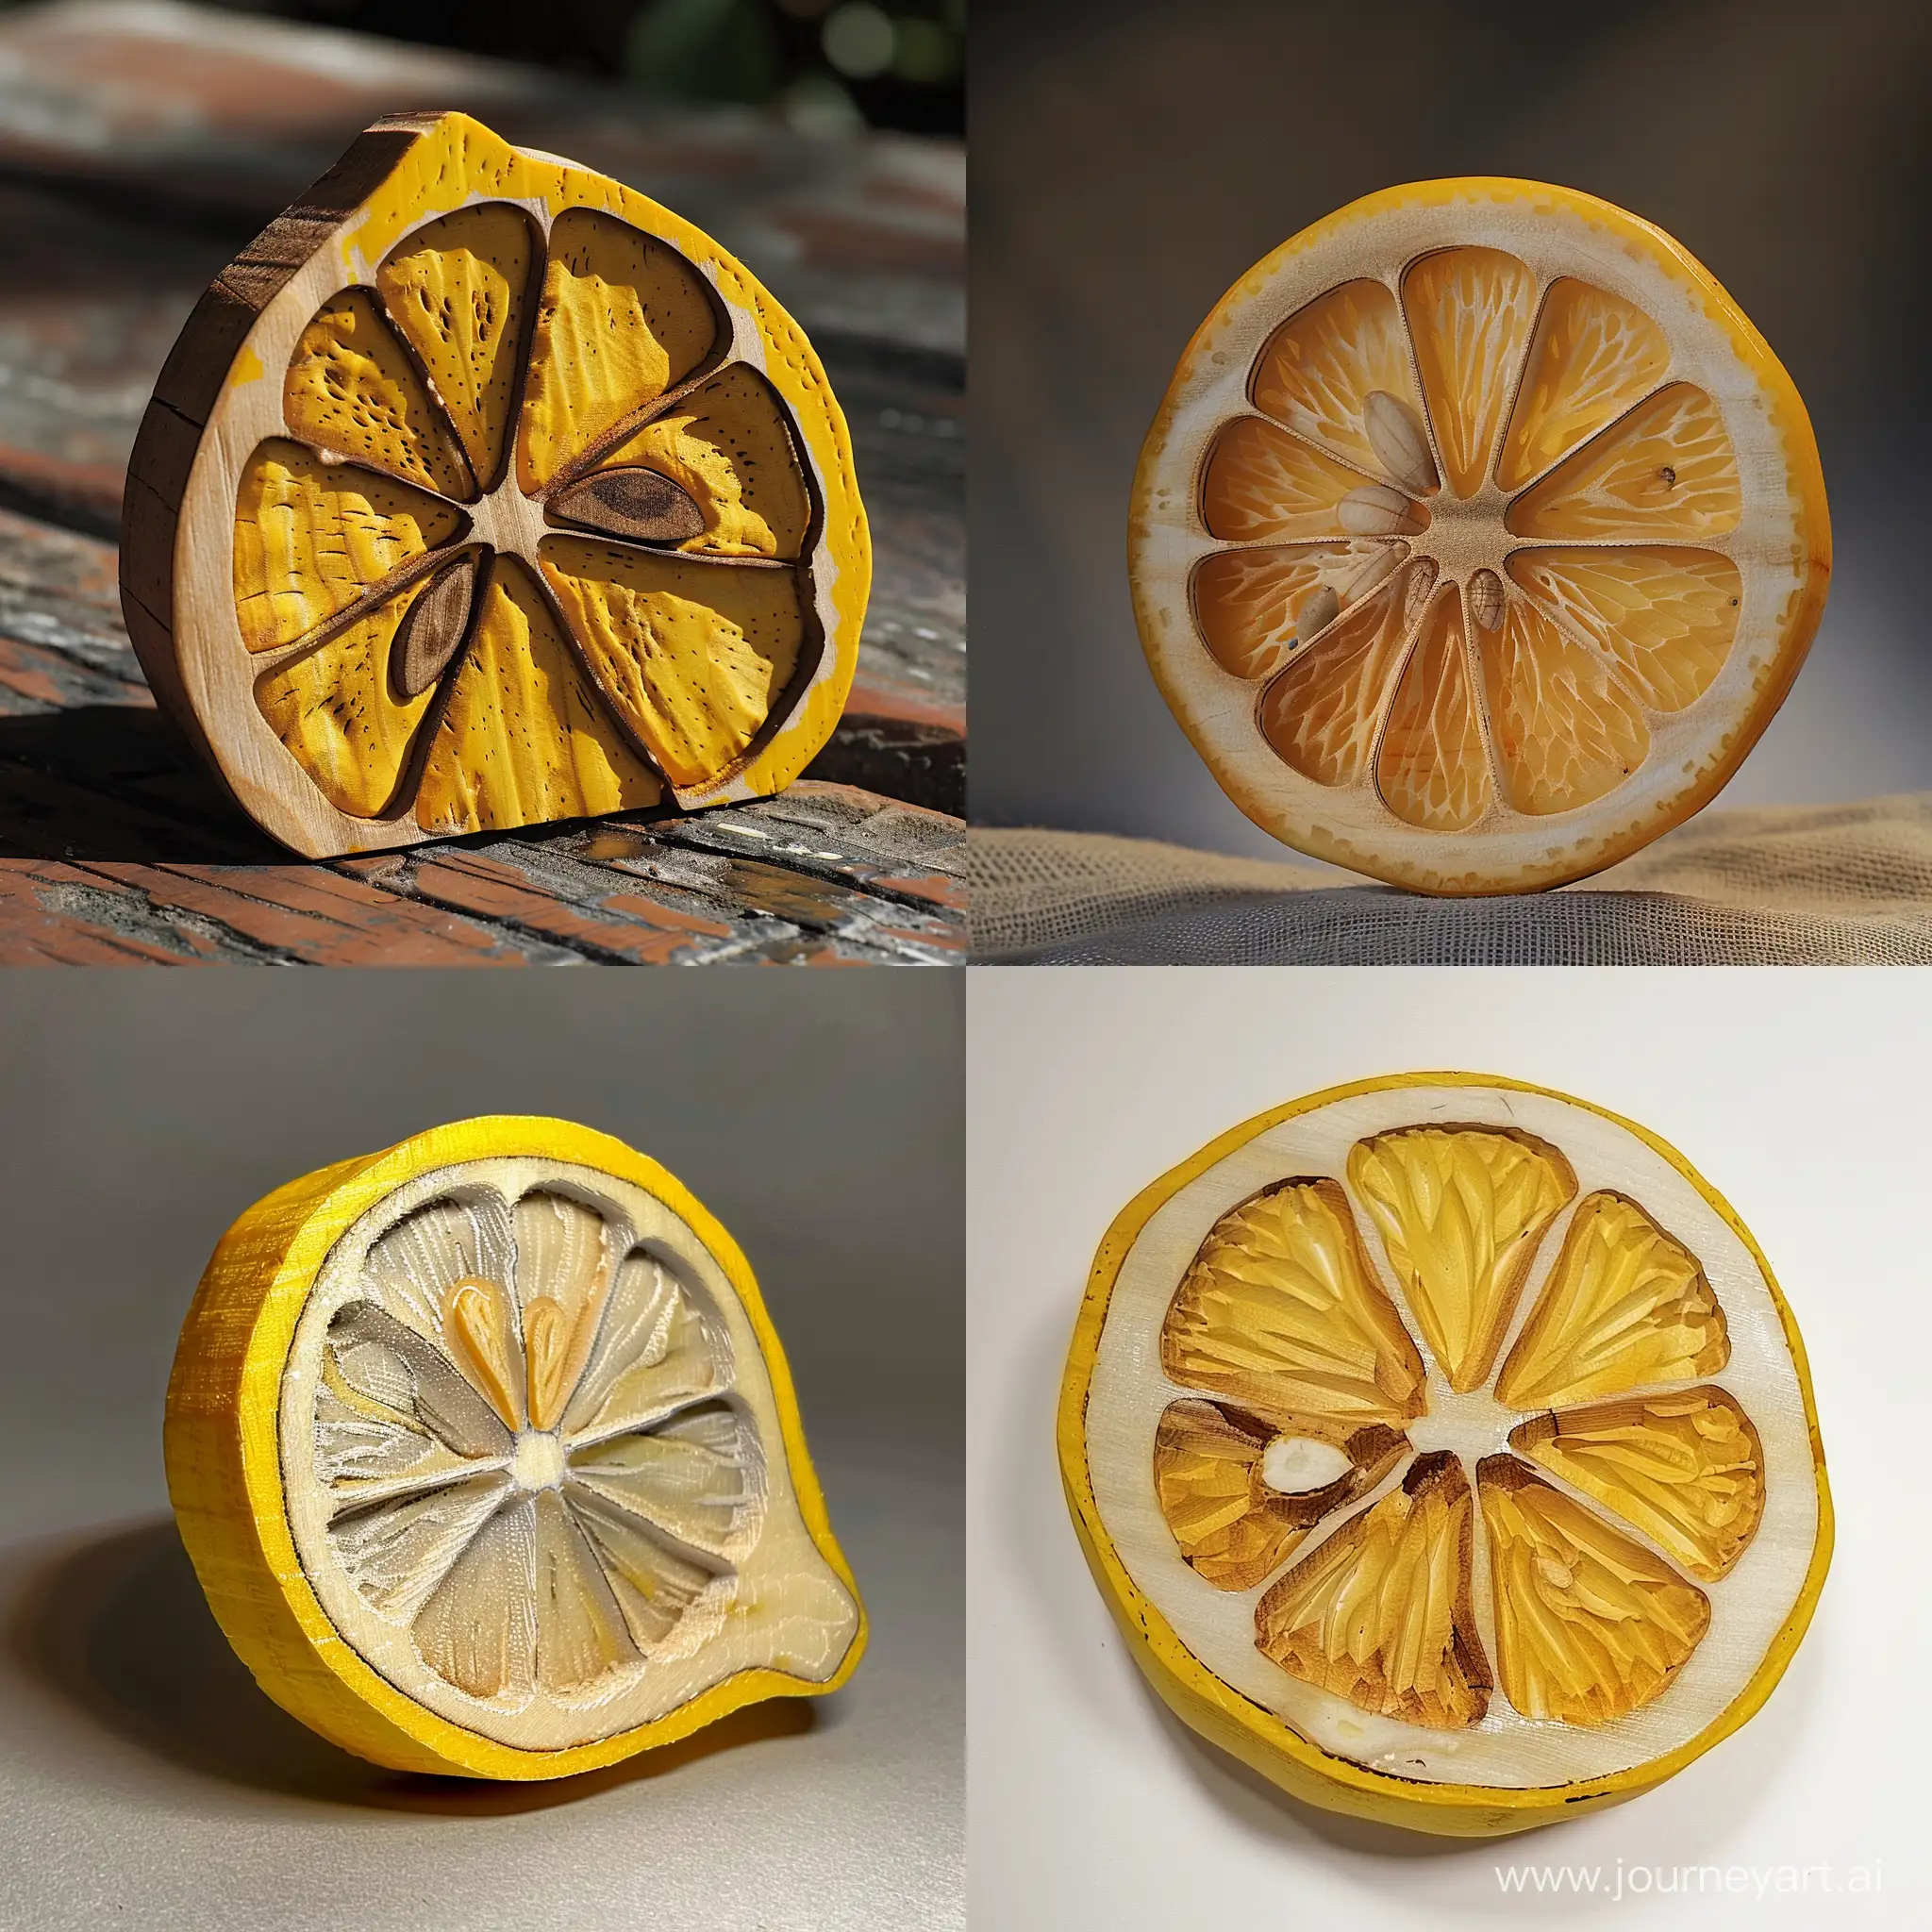 Rustic-Wooden-Lemon-Artwork-with-Vintage-Vibes